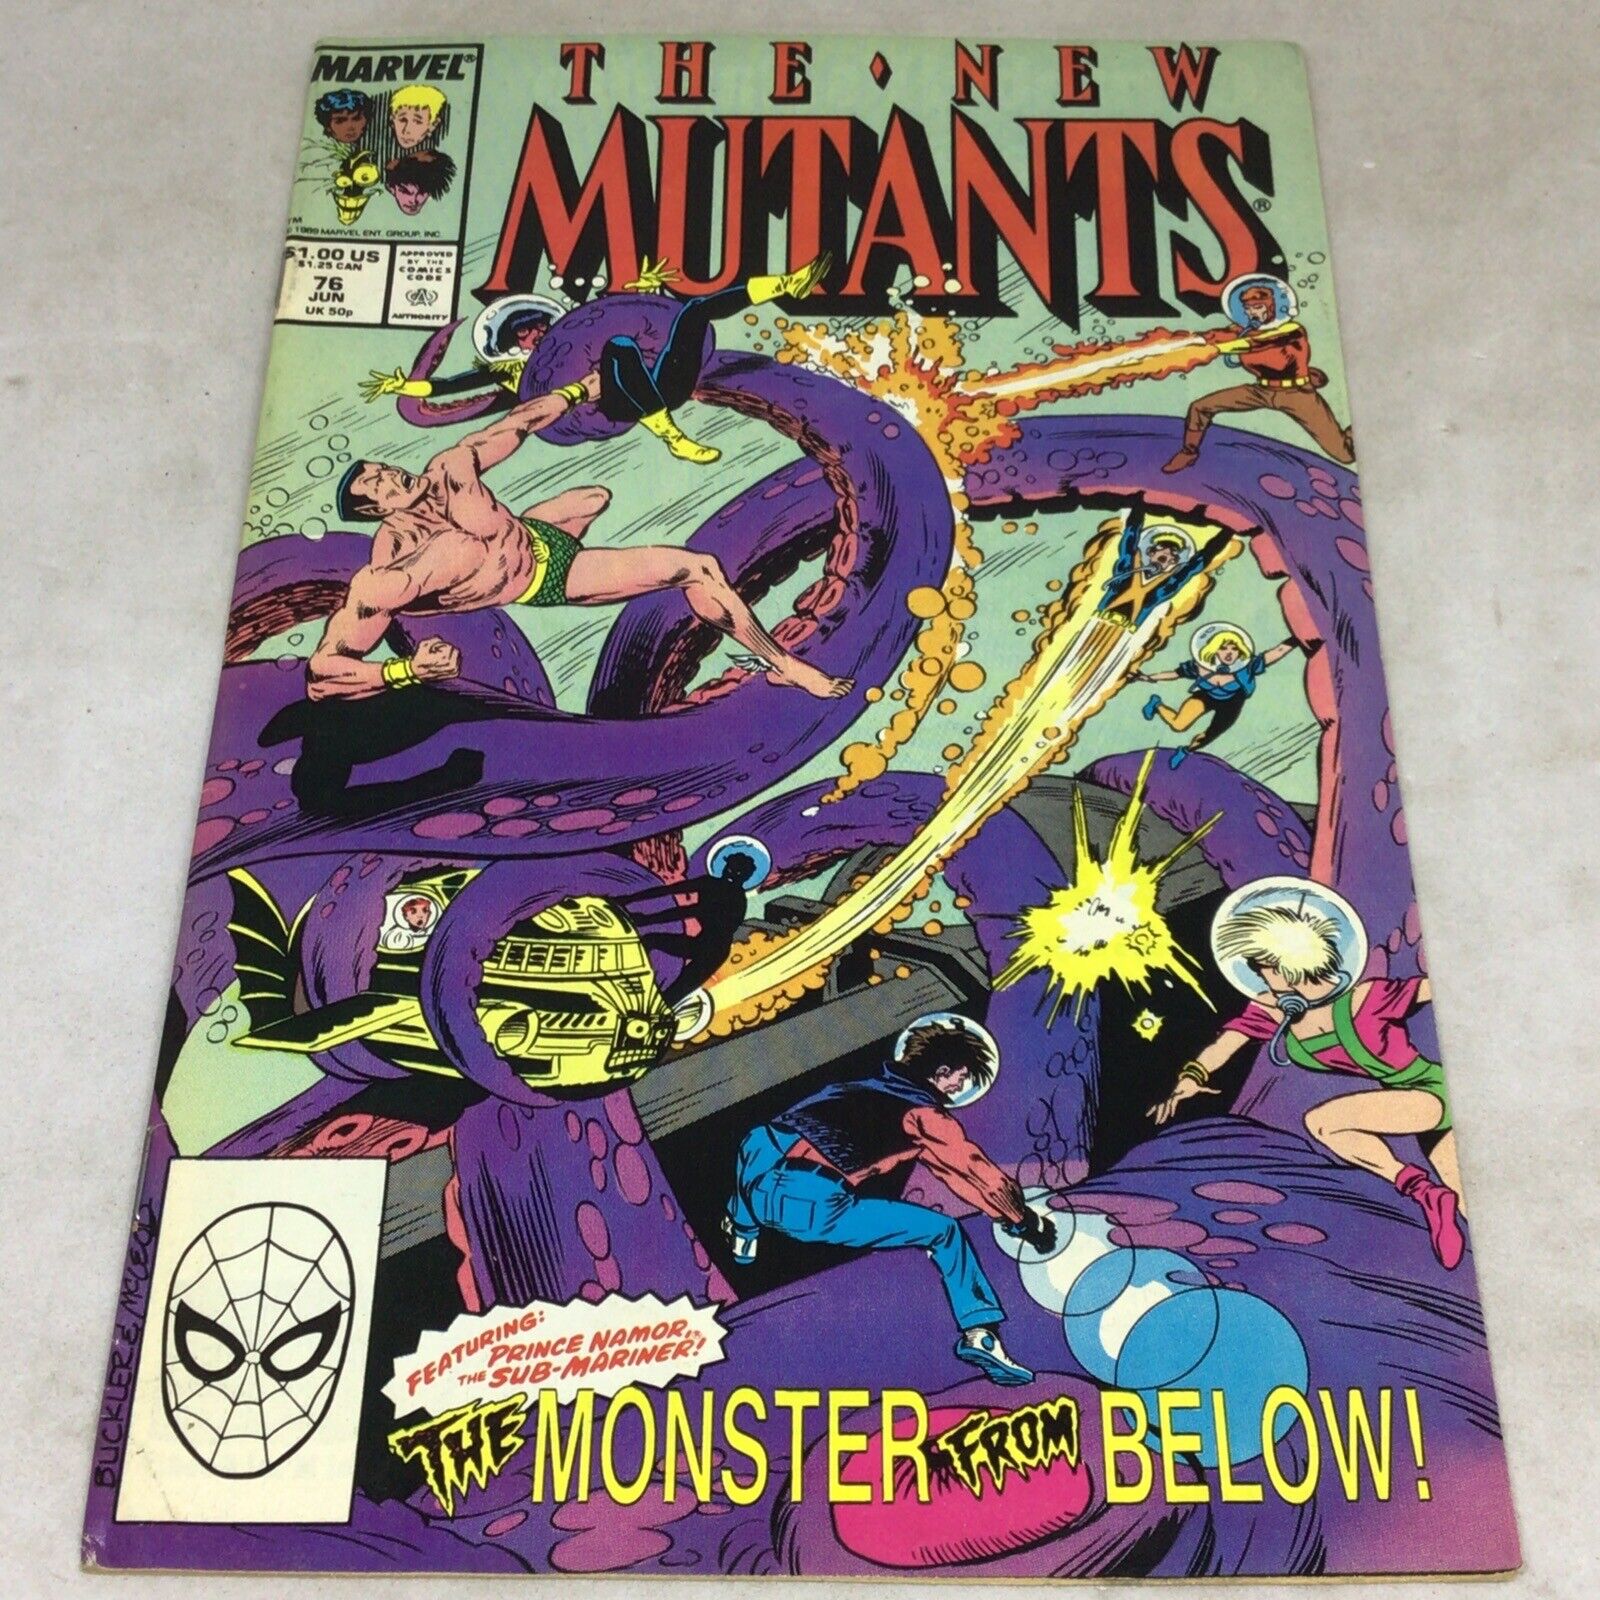 Vint. June 1989 The New Mutants The Monster From Below Volume #76 Marvel Comics